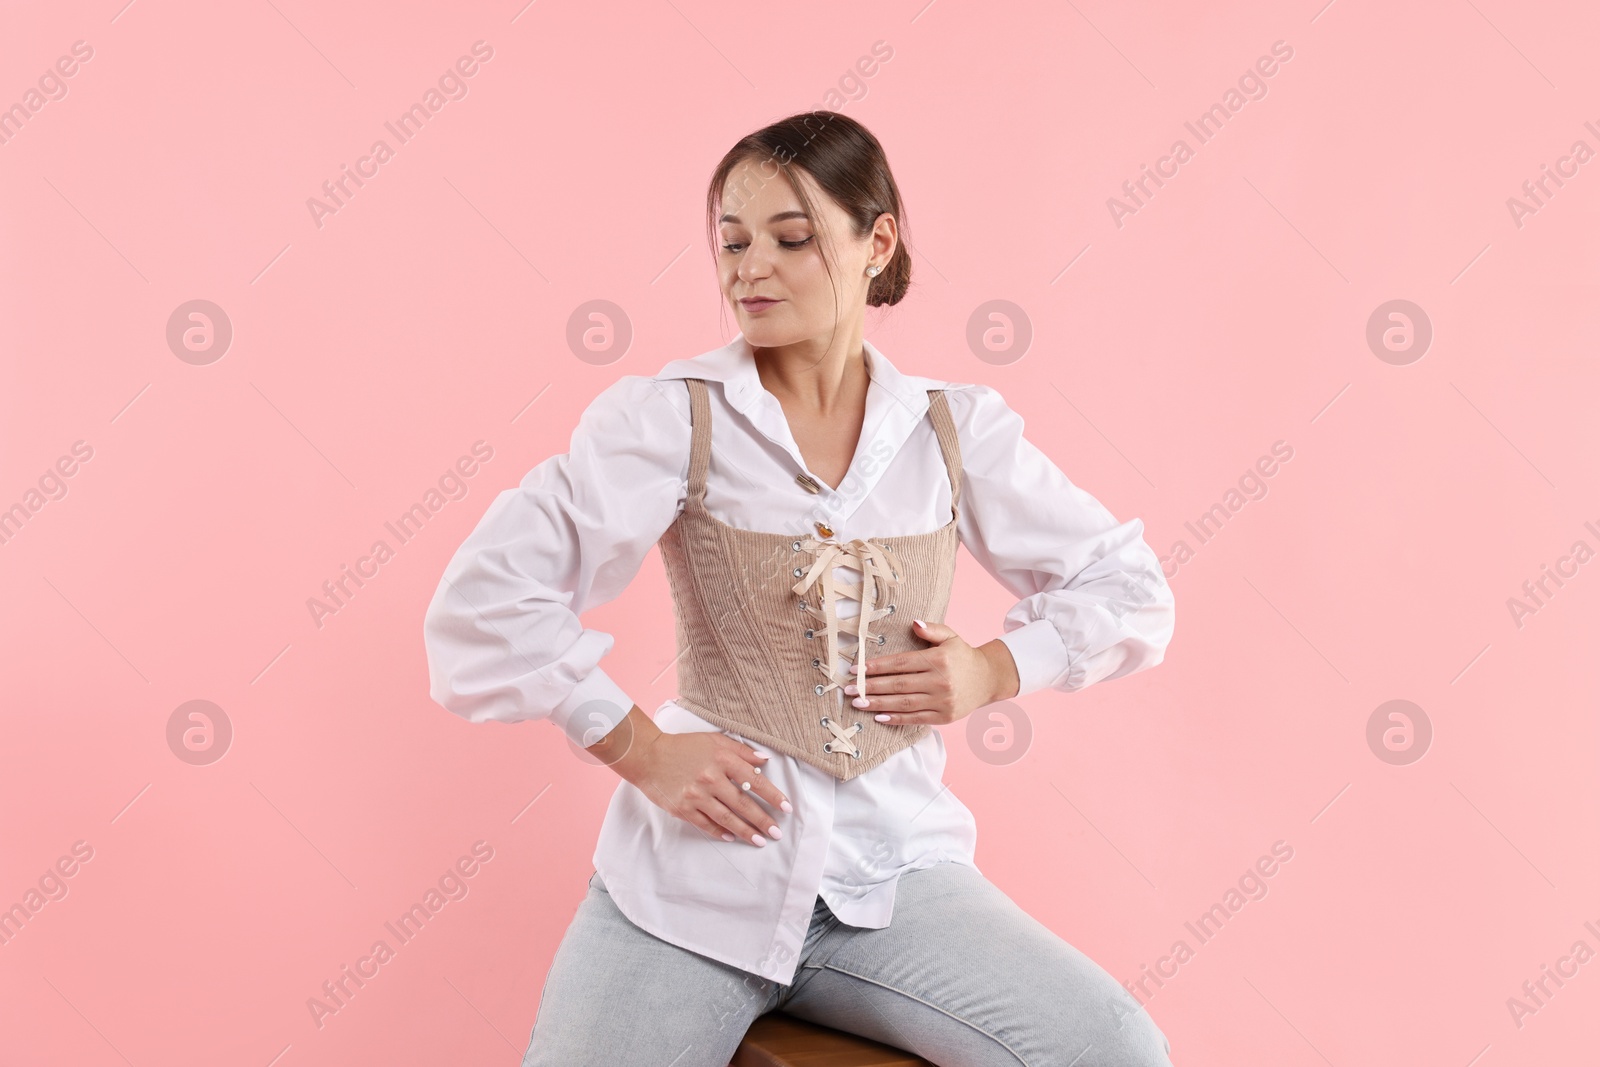 Photo of Beautiful woman in stylish corset posing on pink background